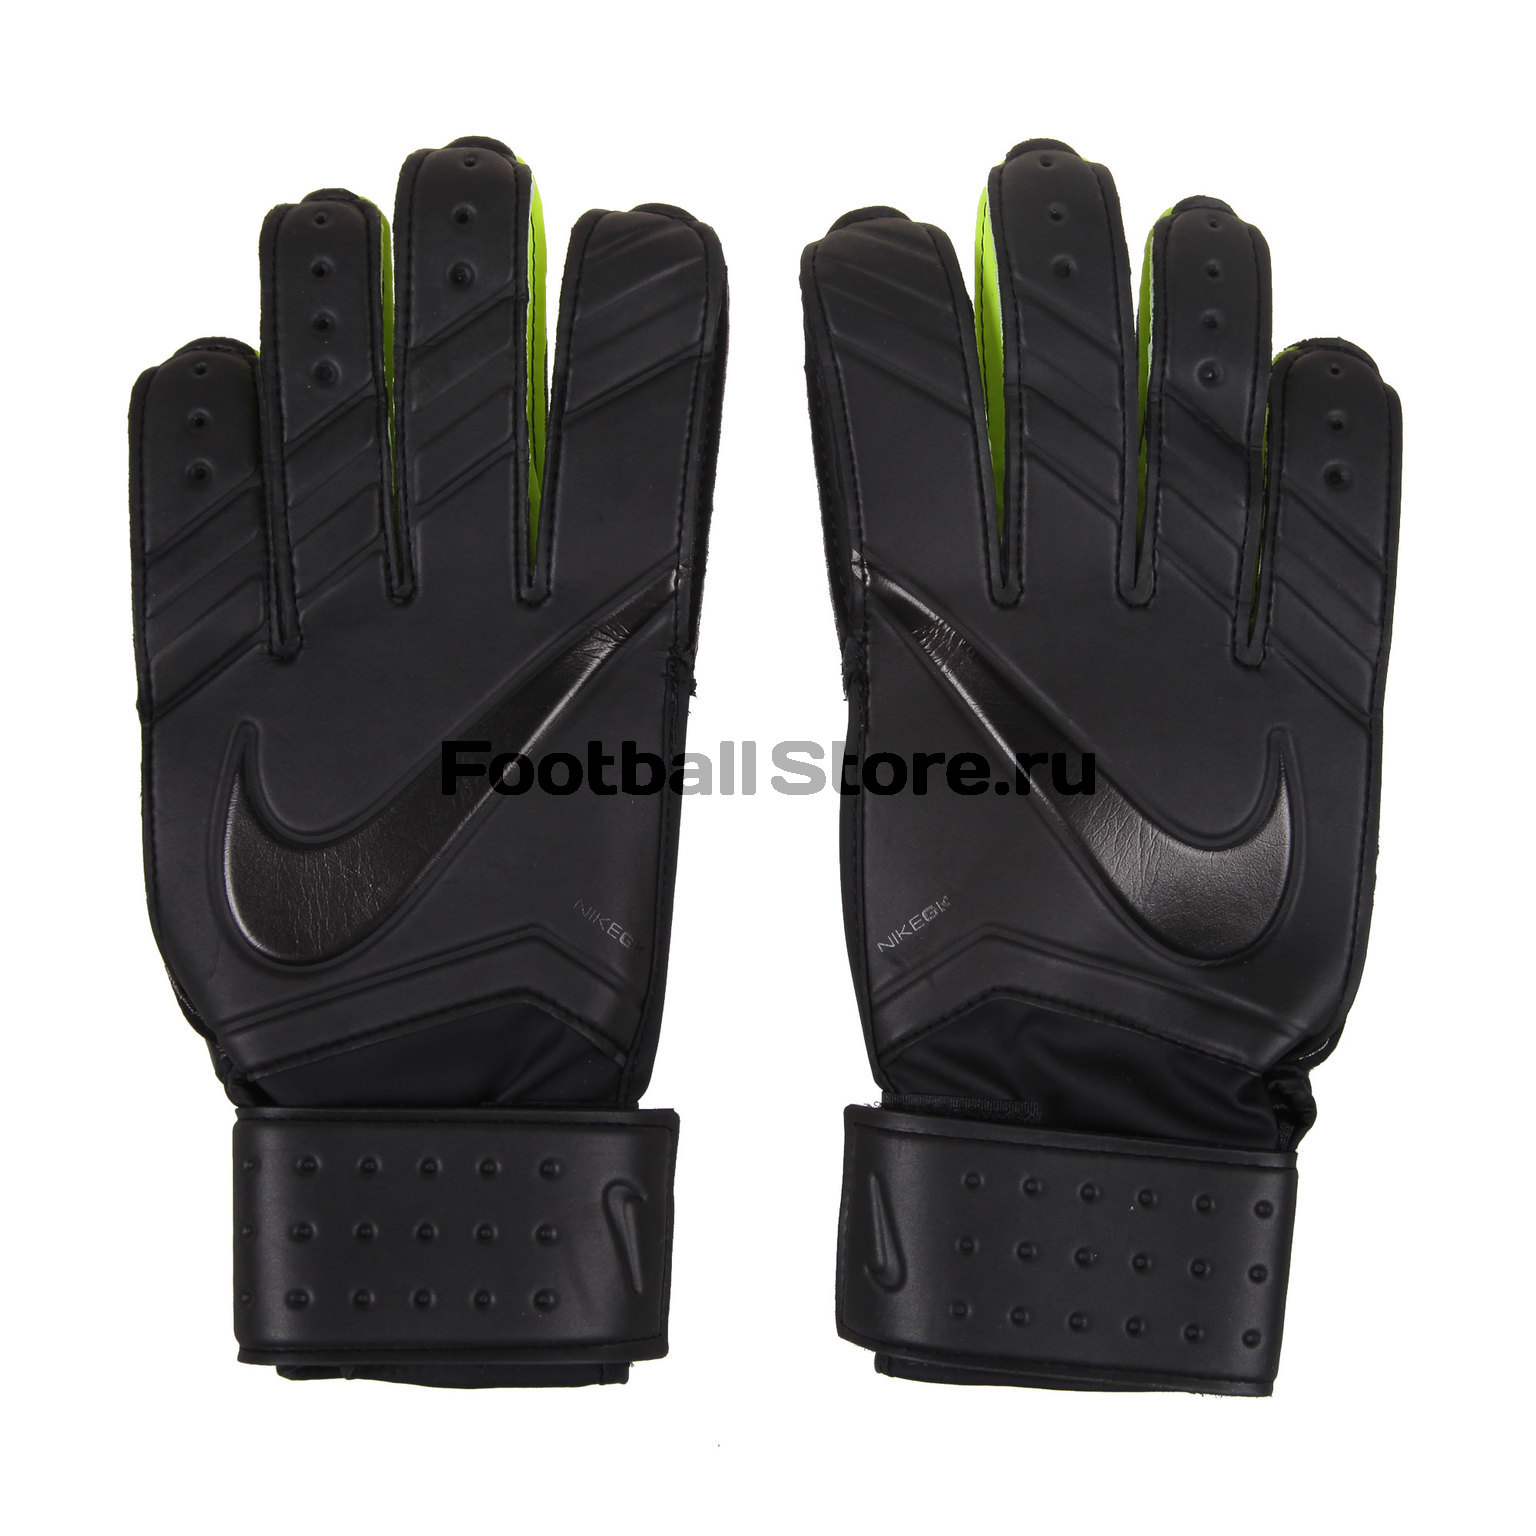 Перчатки вратарские Nike GK Match FA16 GS0330-011 